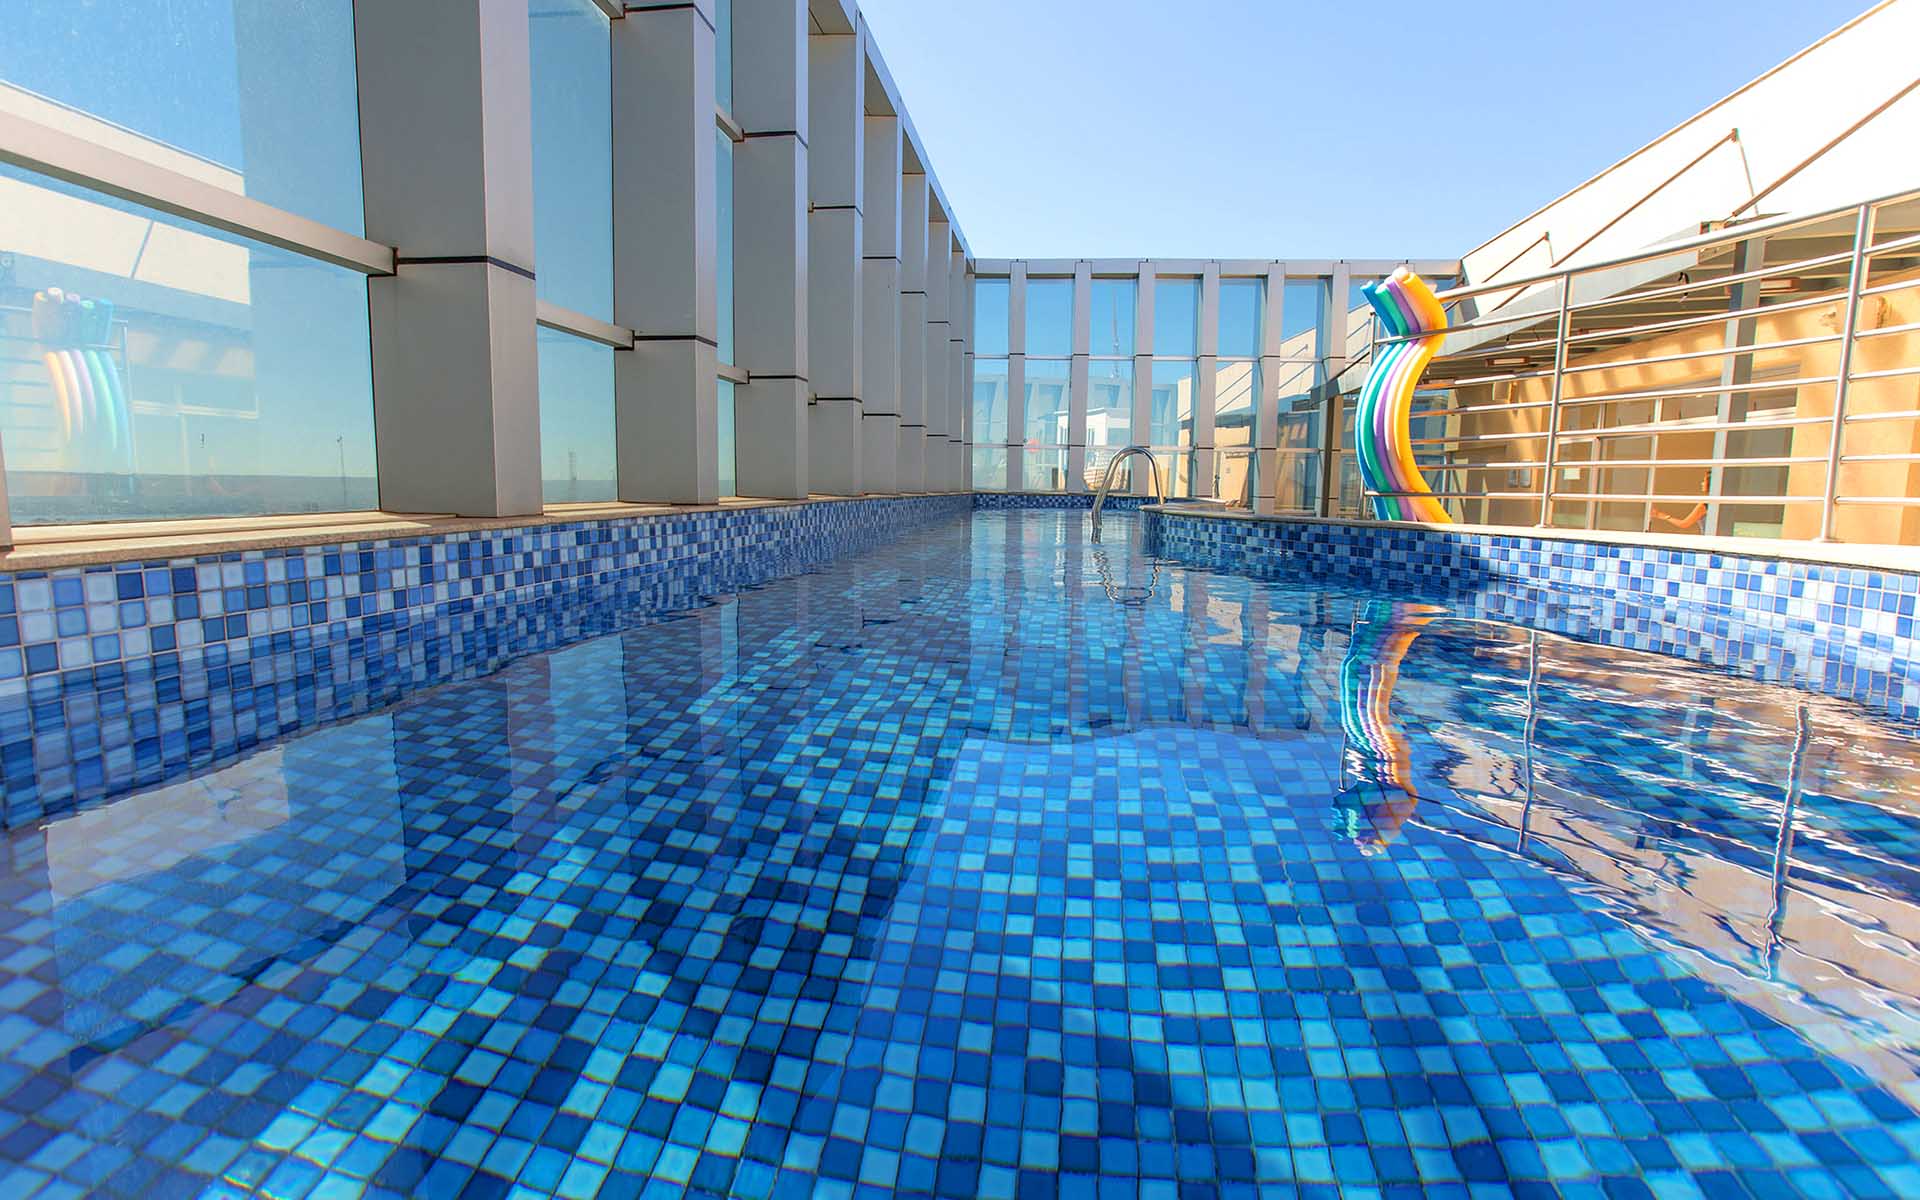 piscina do hotel fusion hplus em brasilia